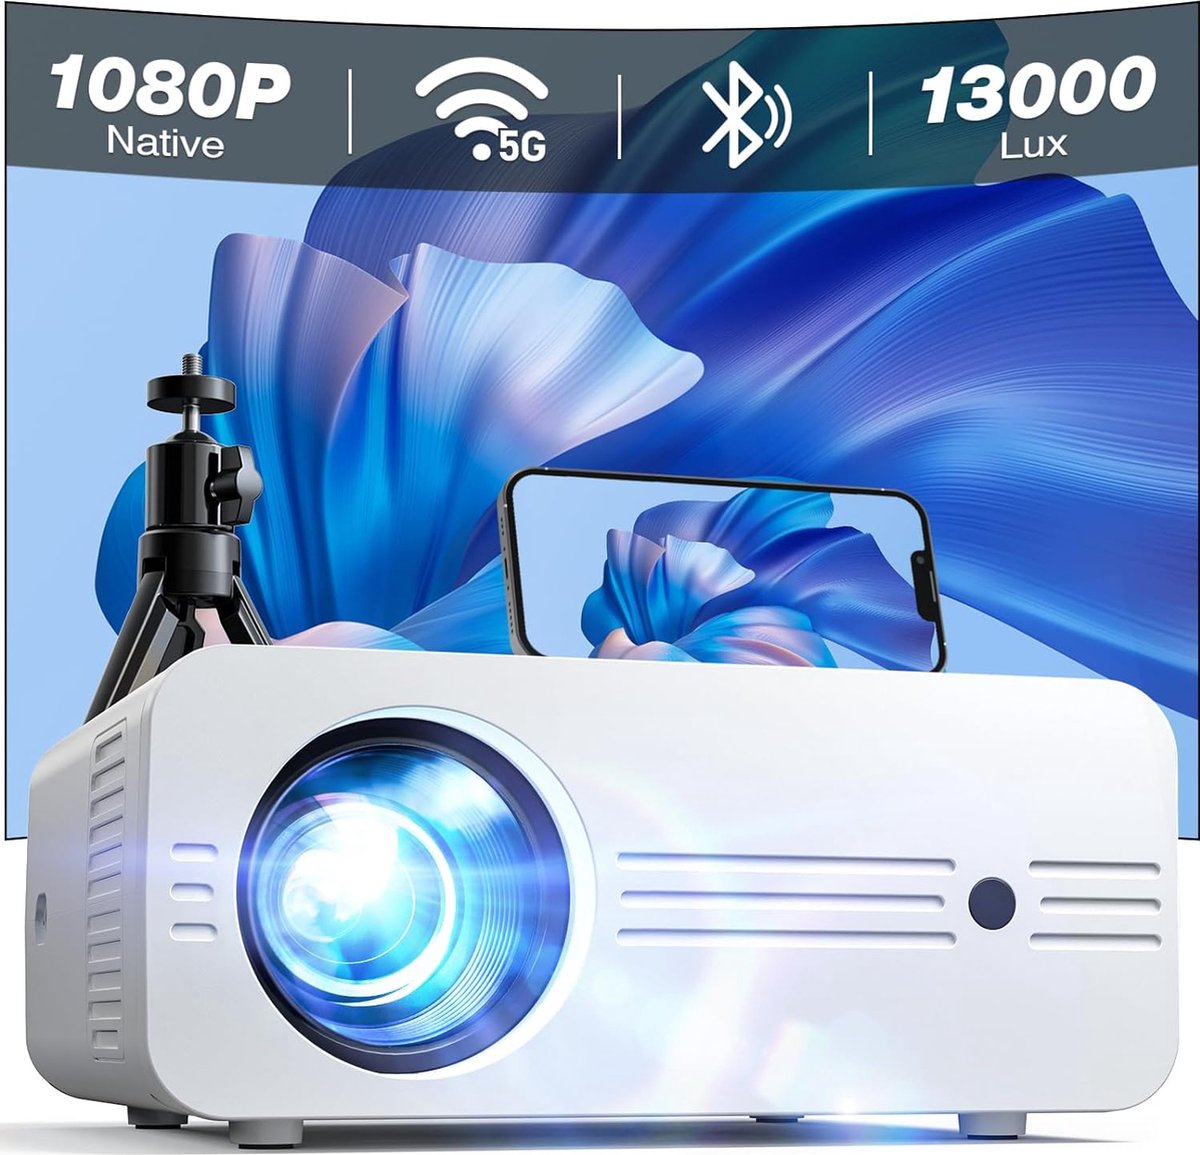 Beamer - 13000 Lumen - Projector - 1080P - Bluetooth - 5G - Inclusief Statief x Draagtas